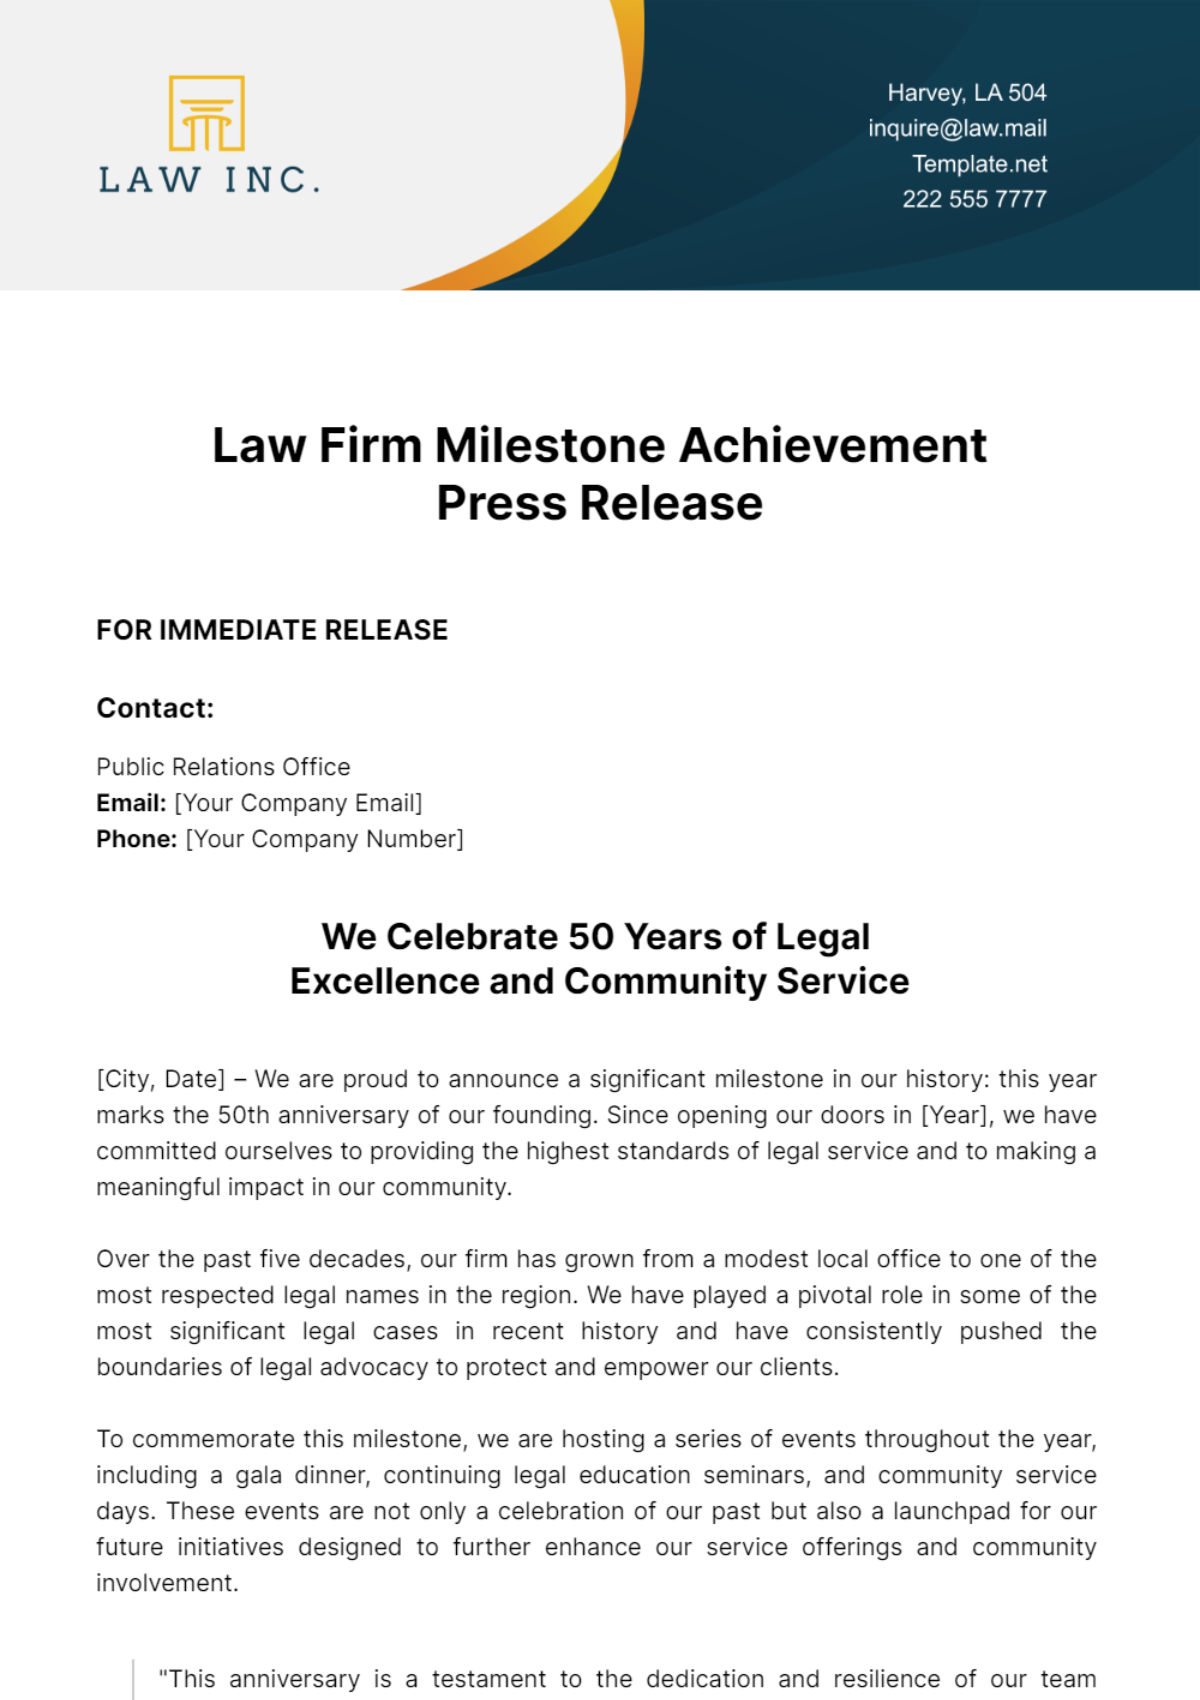 Free Law Firm Milestone Achievement Press Release Template